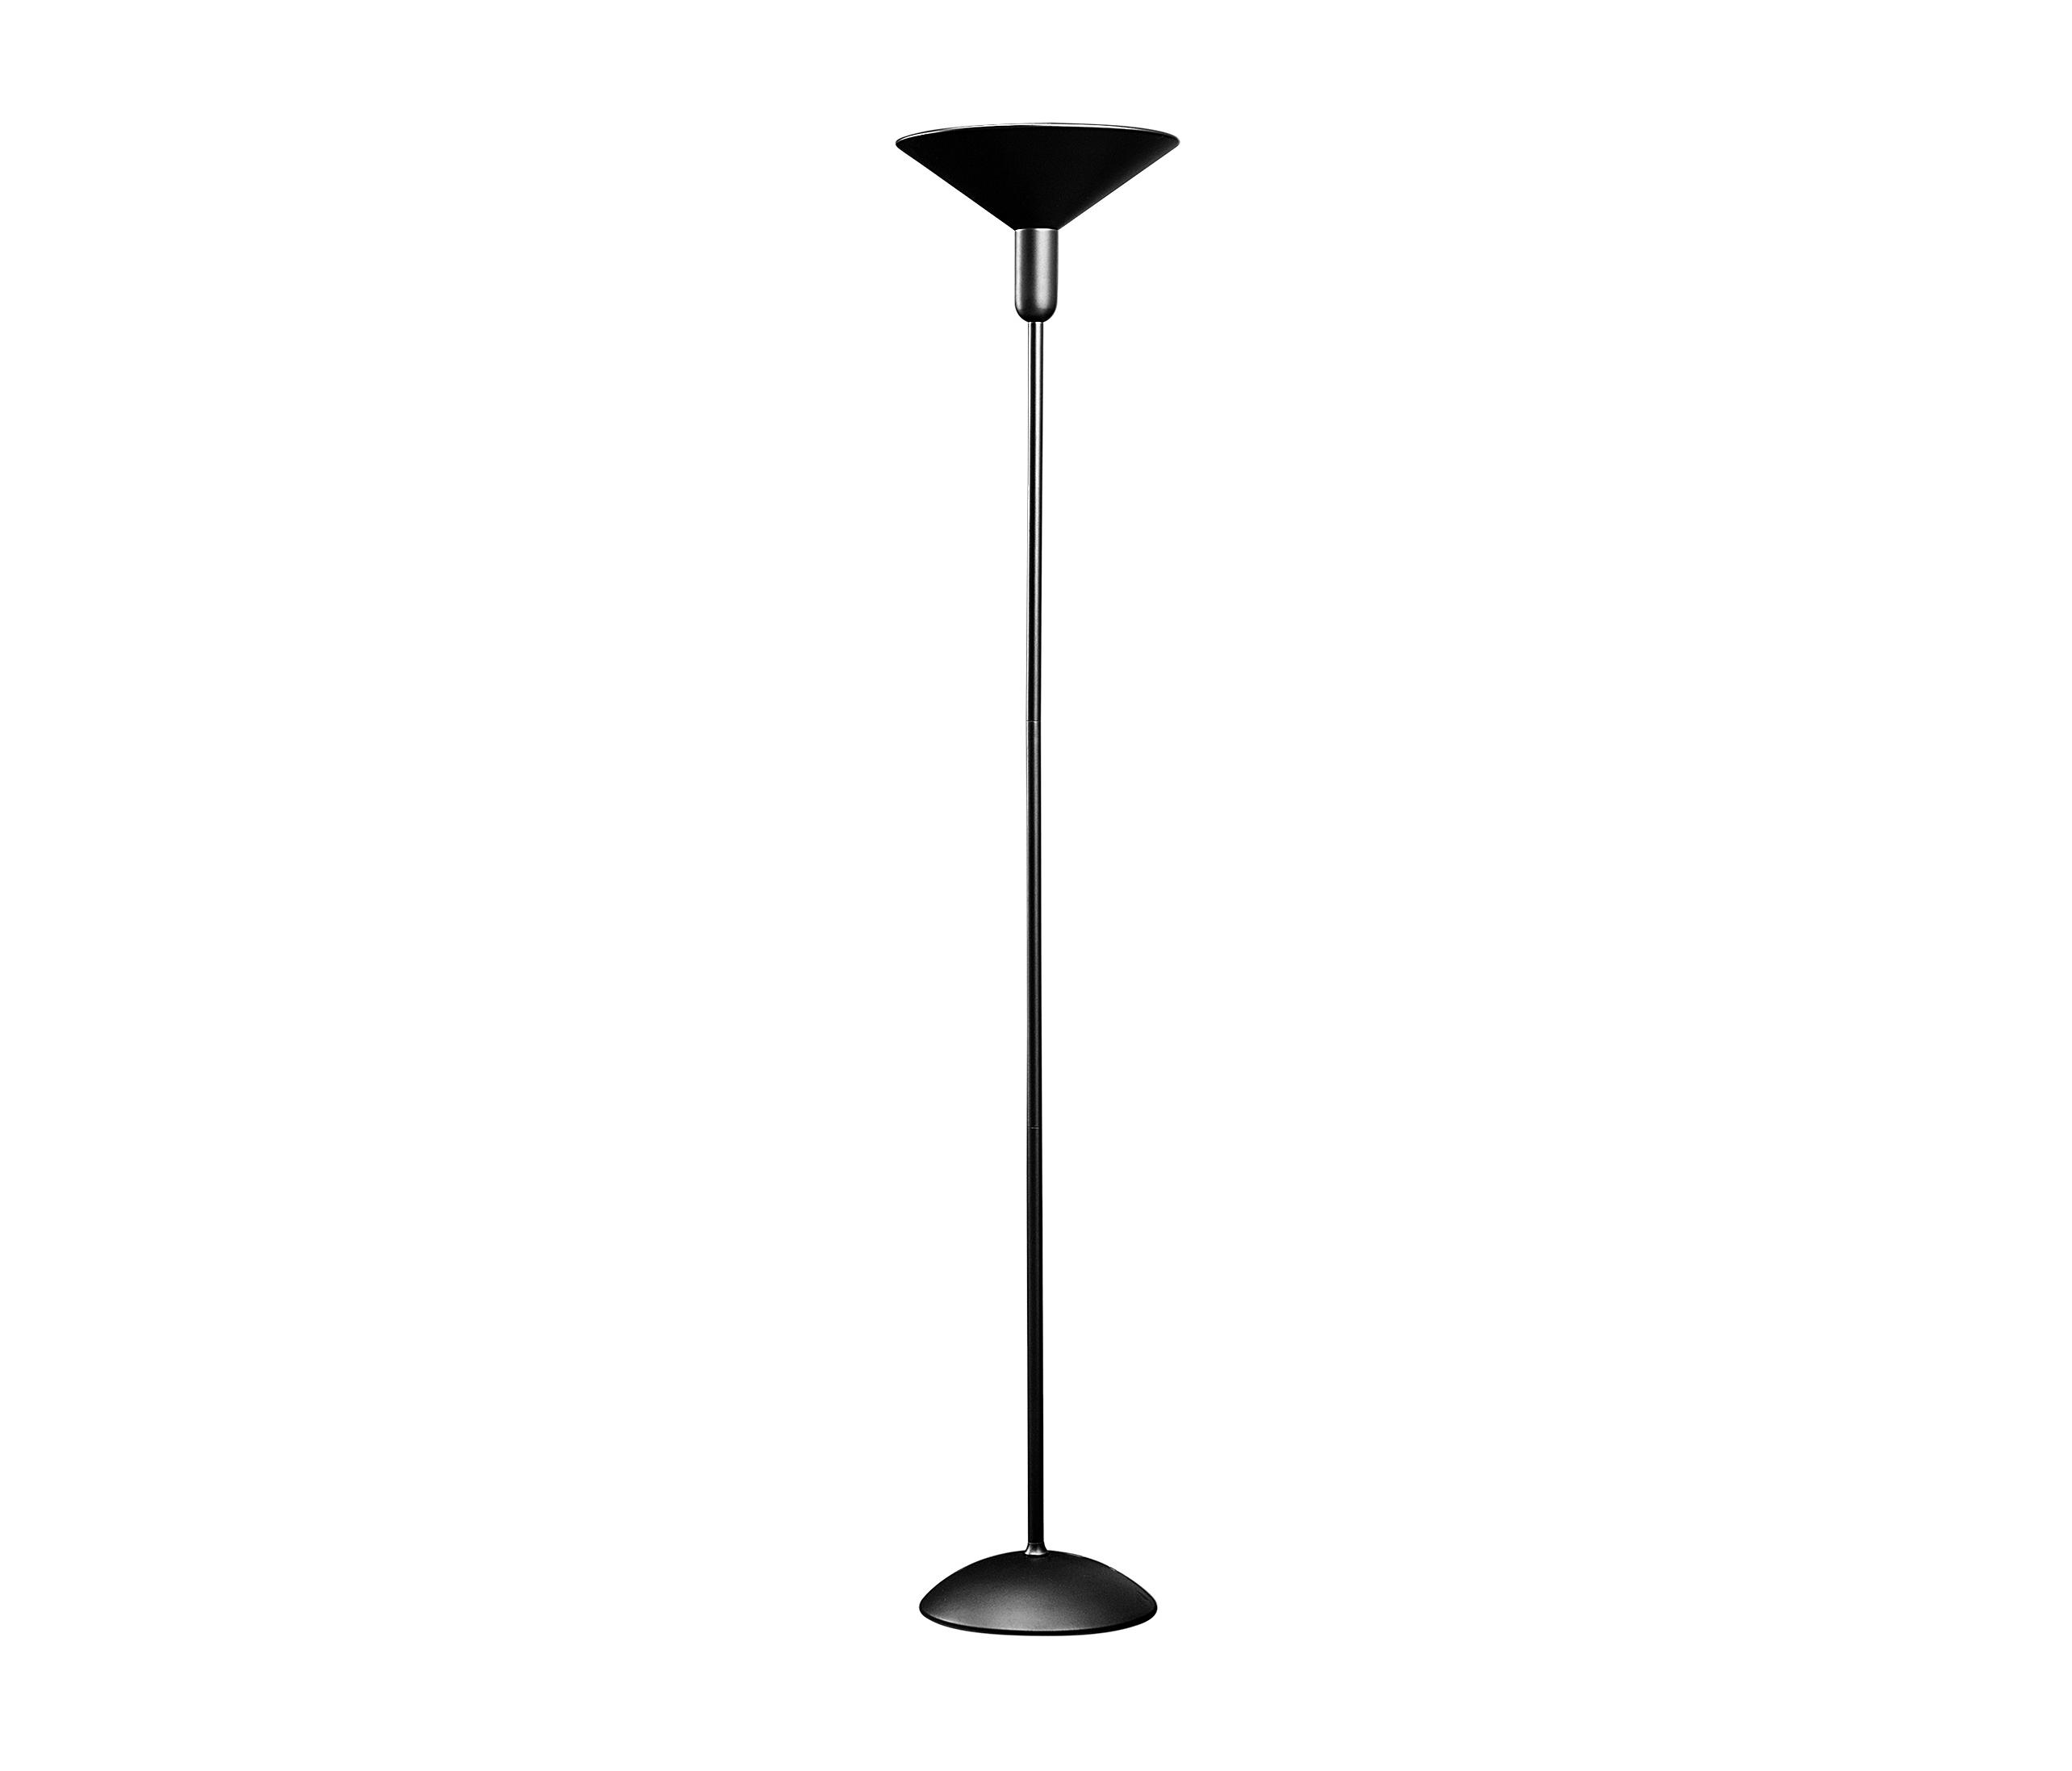 Edmonton Matt Black Floor Lamp Architonic inside size 2568 X 2195